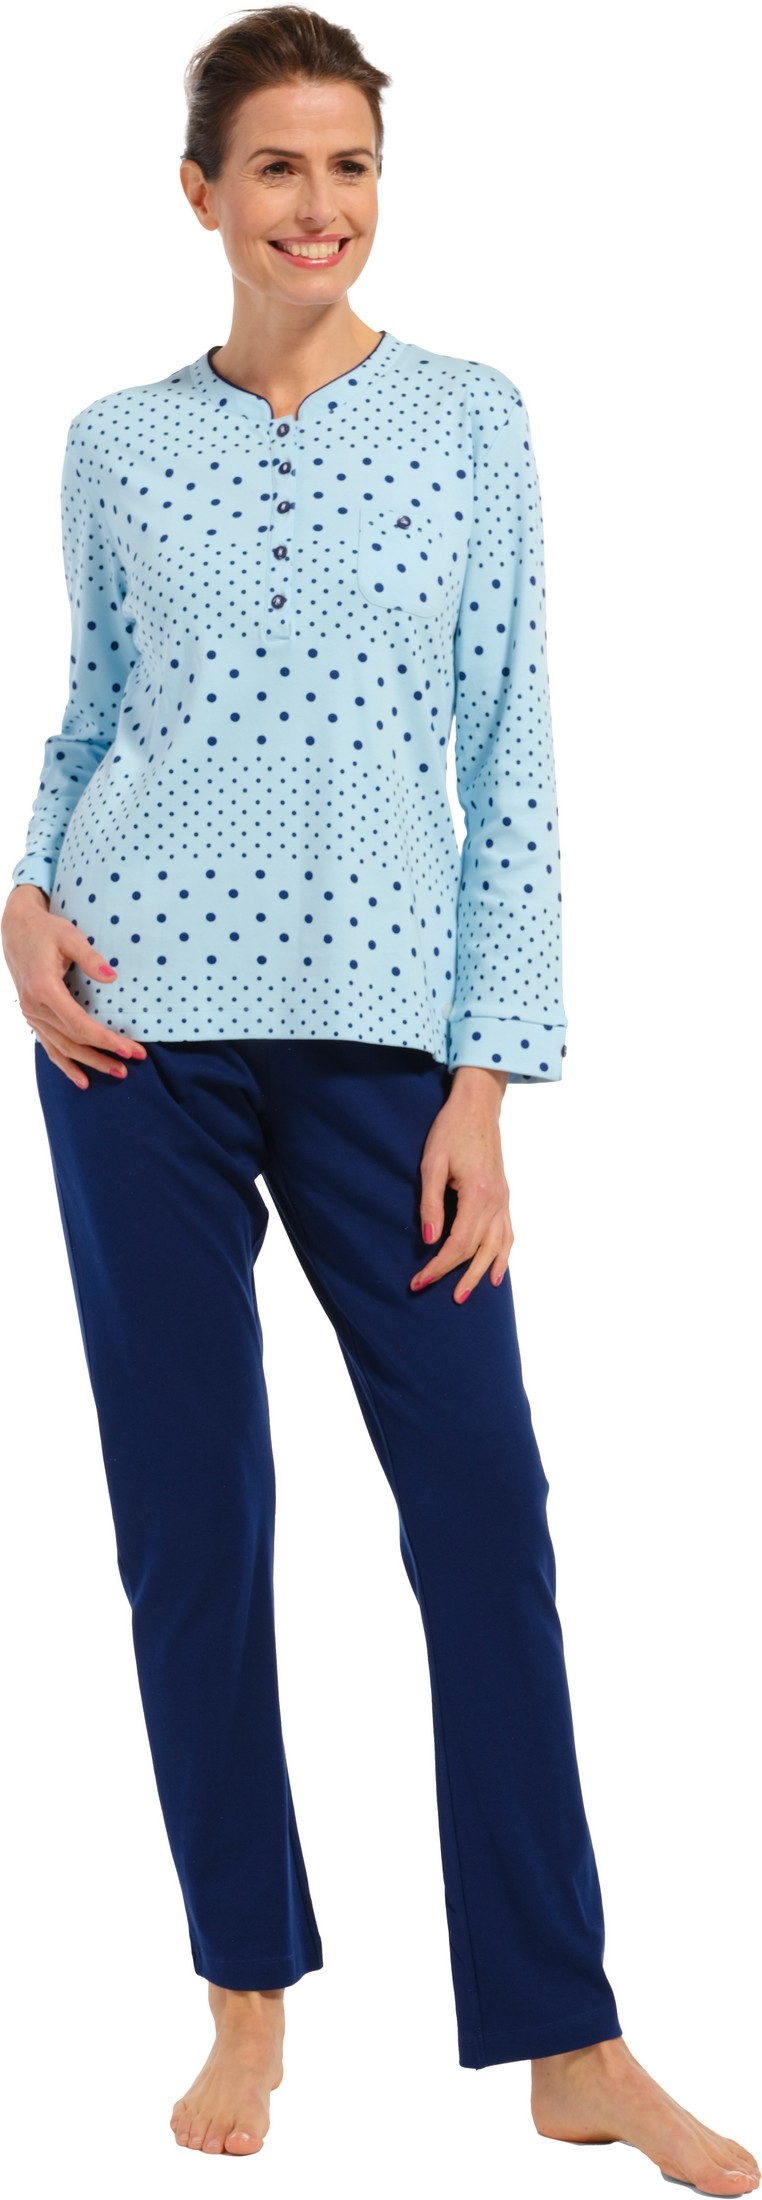 Pastunette dames pyjama 20232-162-4 - Blauw - 40